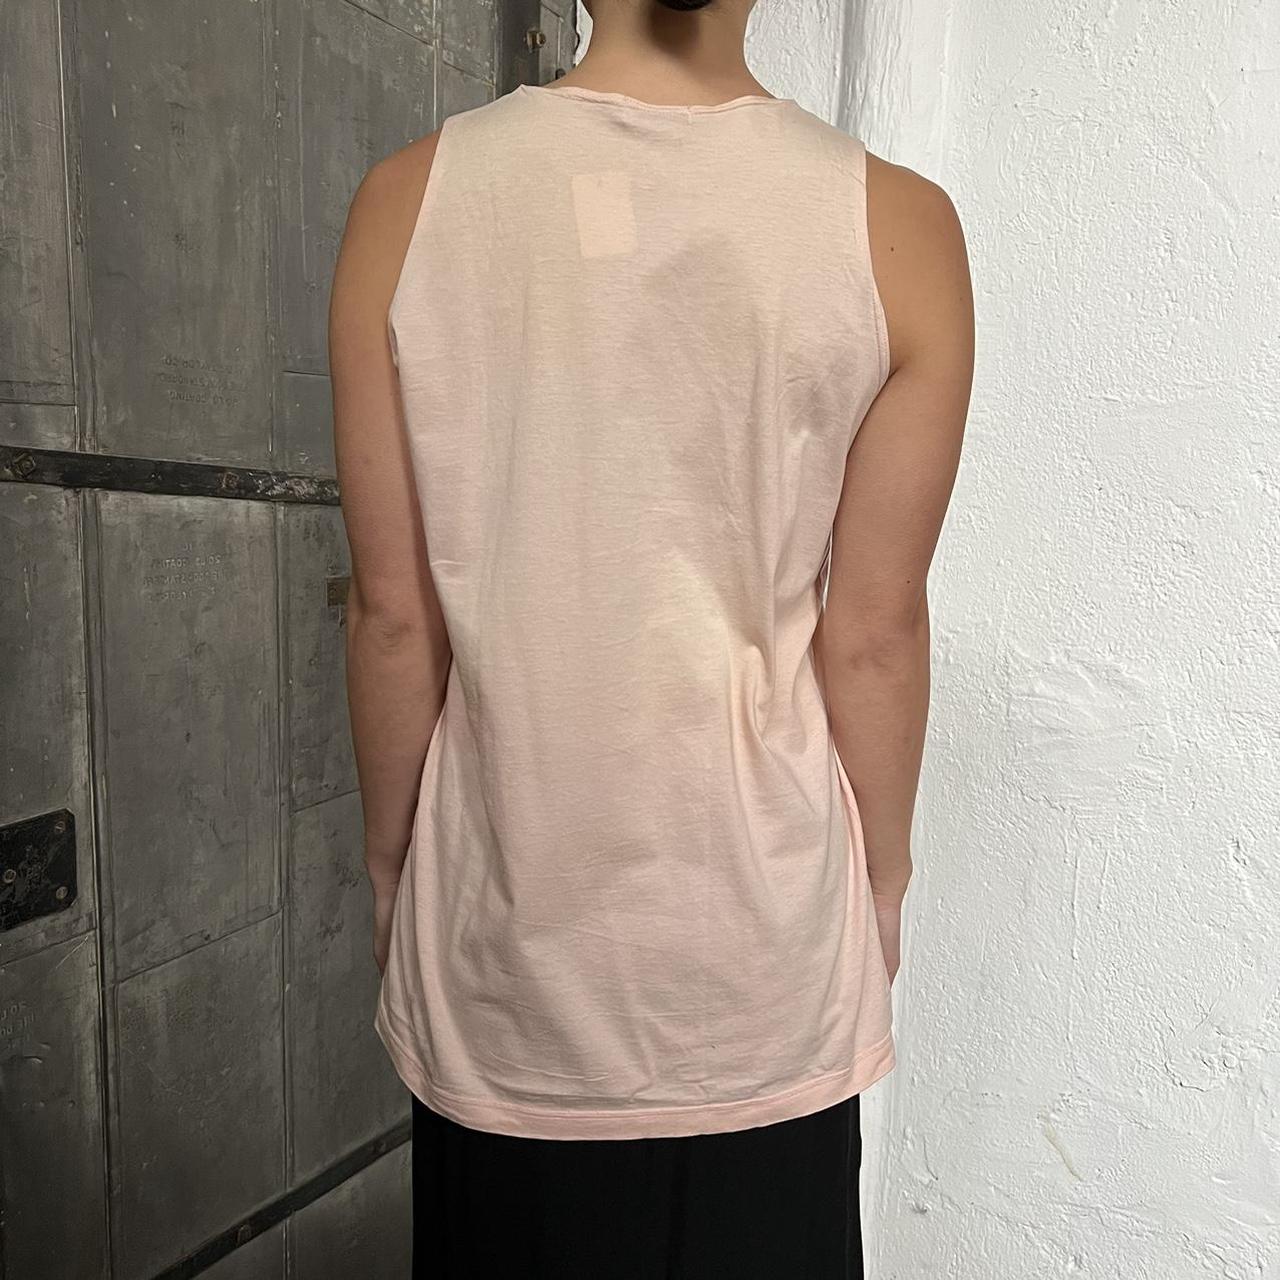 Chantal Thomass Women's Tan and Pink Vest (3)